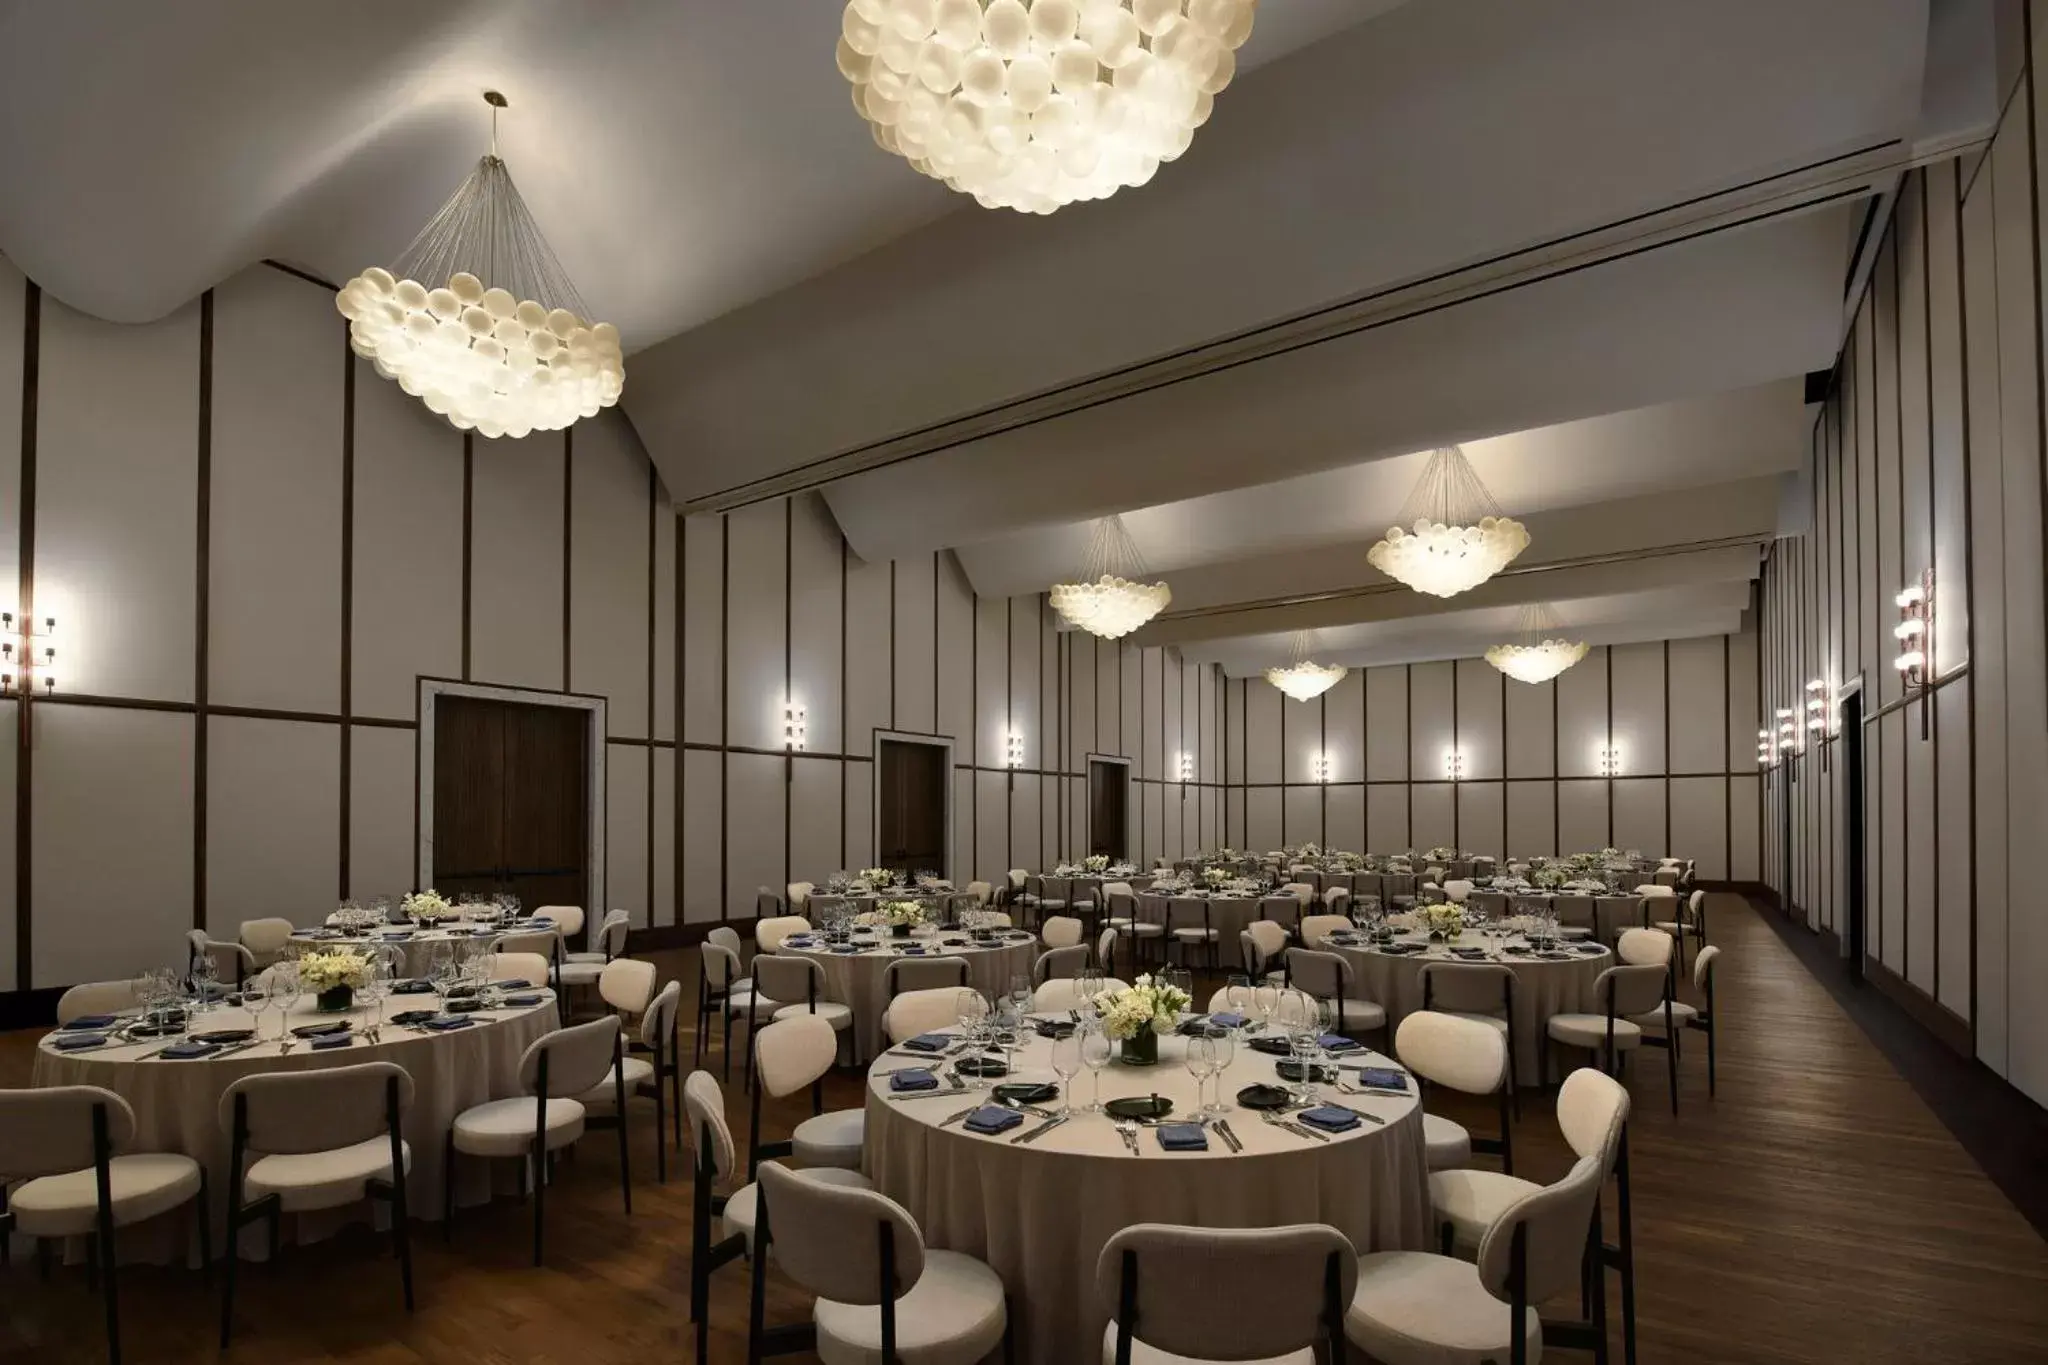 Meeting/conference room, Banquet Facilities in Virgin Hotels Dallas